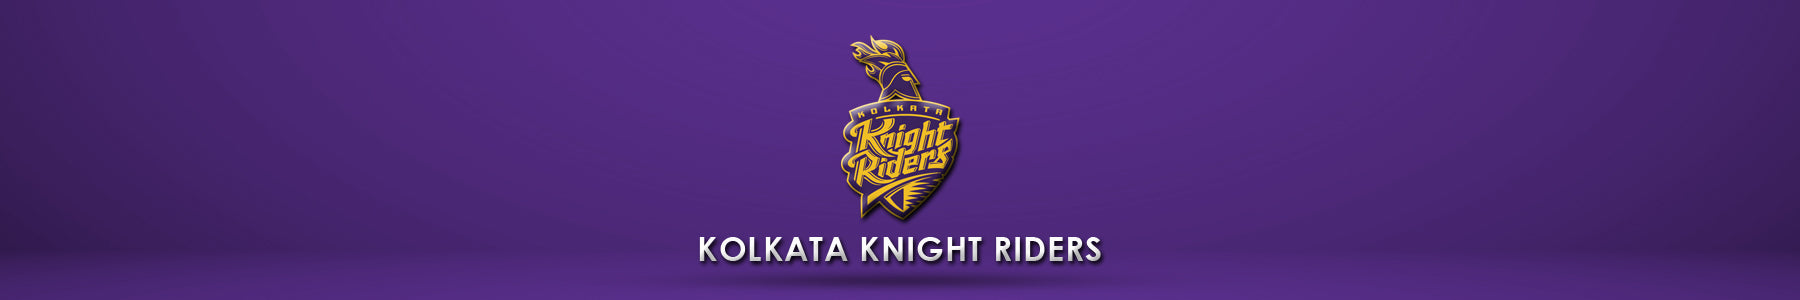 Kolkata Knight Riders Banner